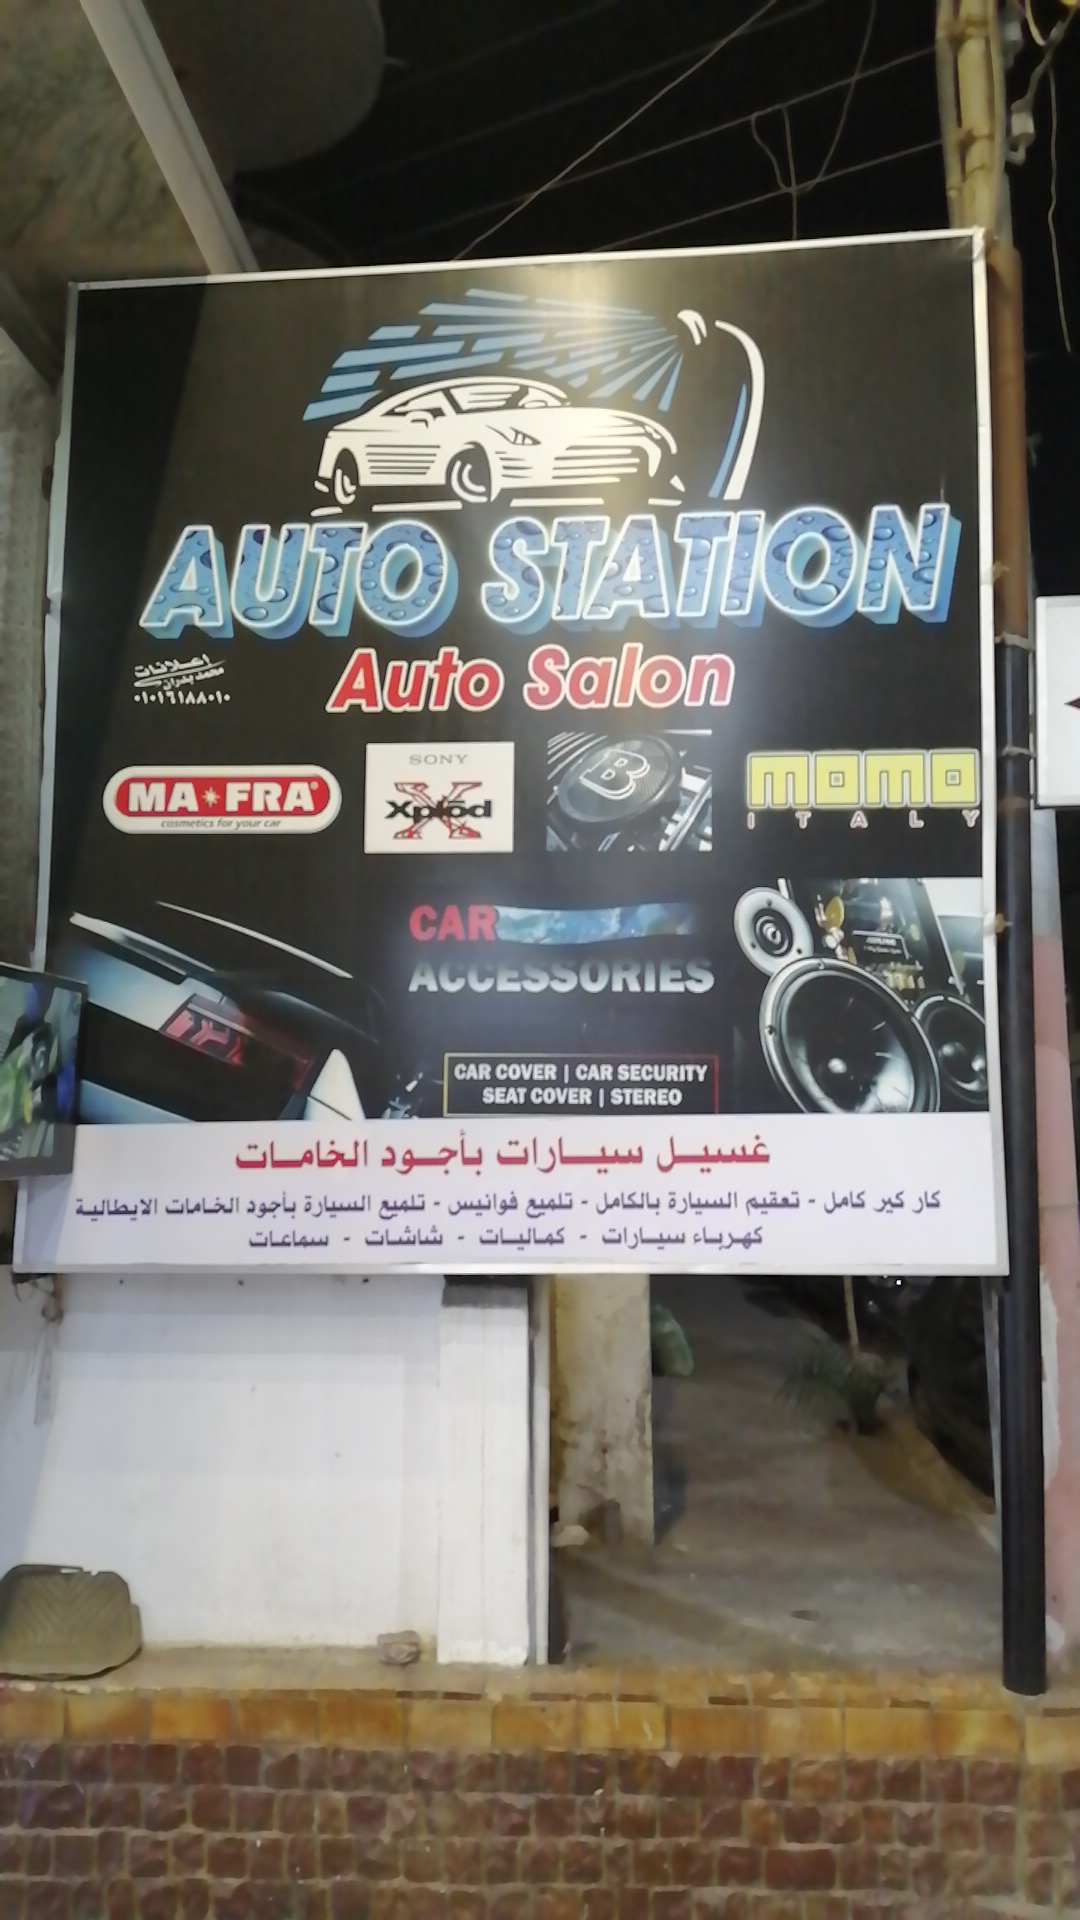 Auto station